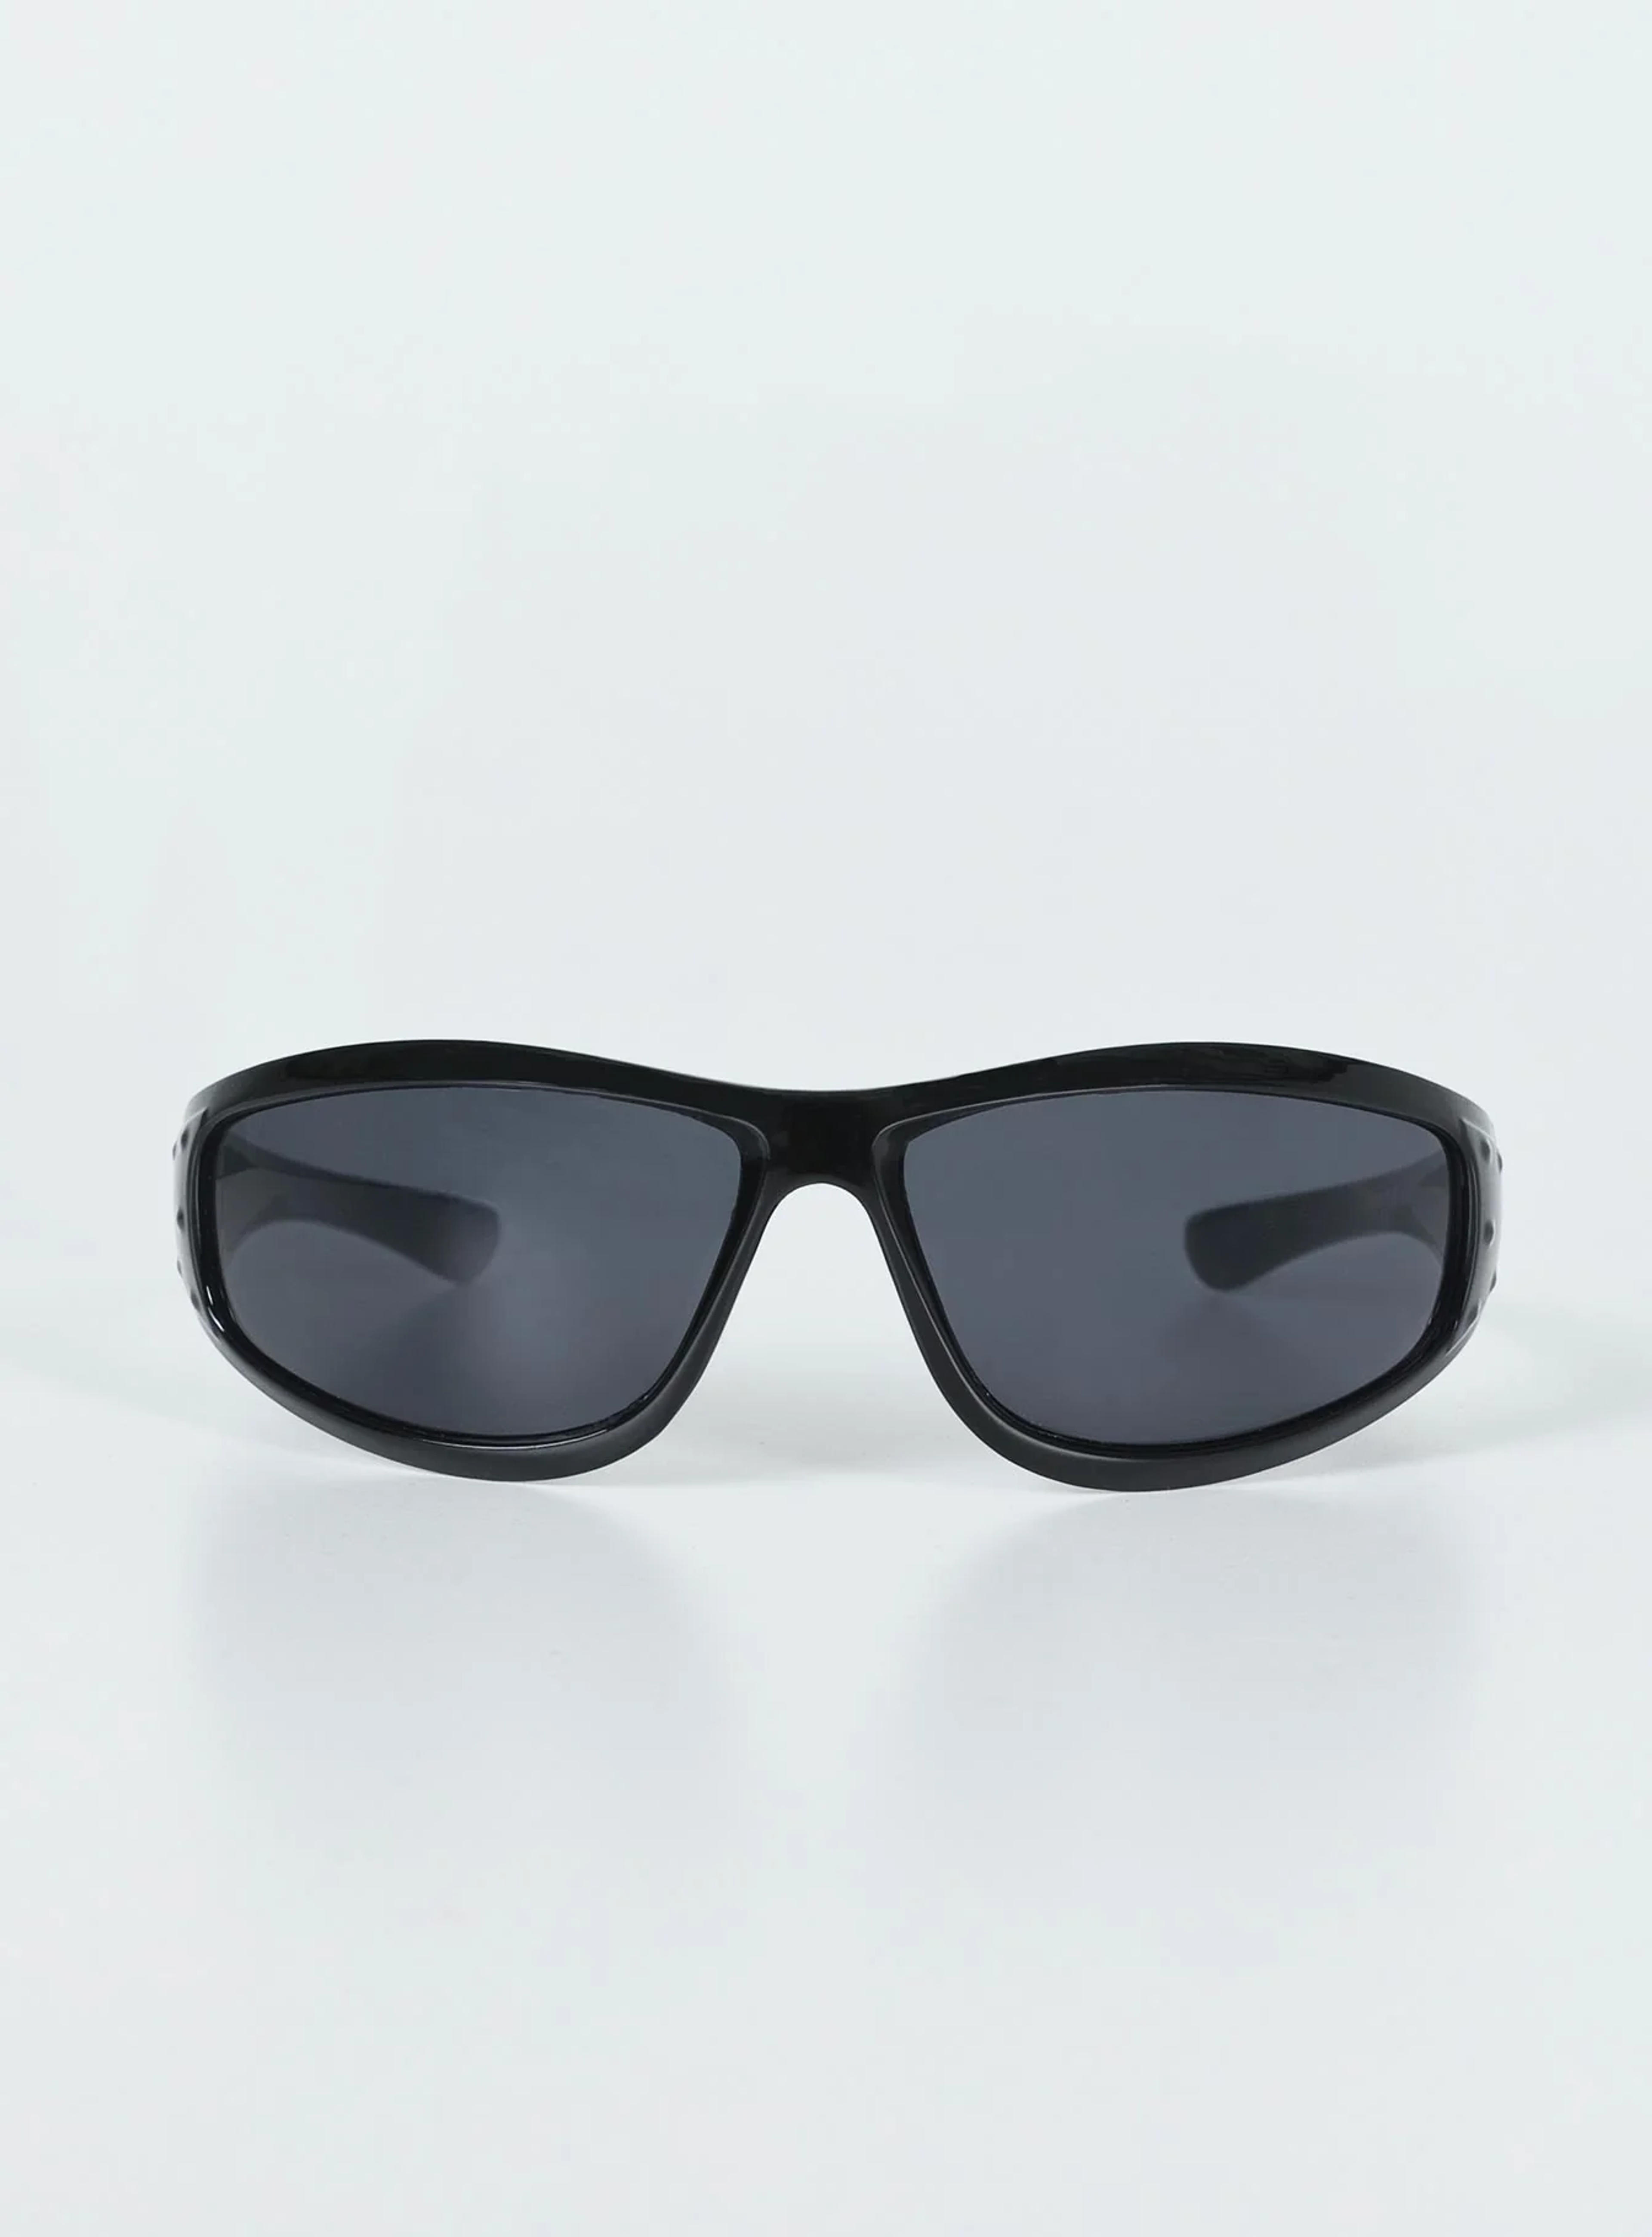 Mora Sunglasses Black